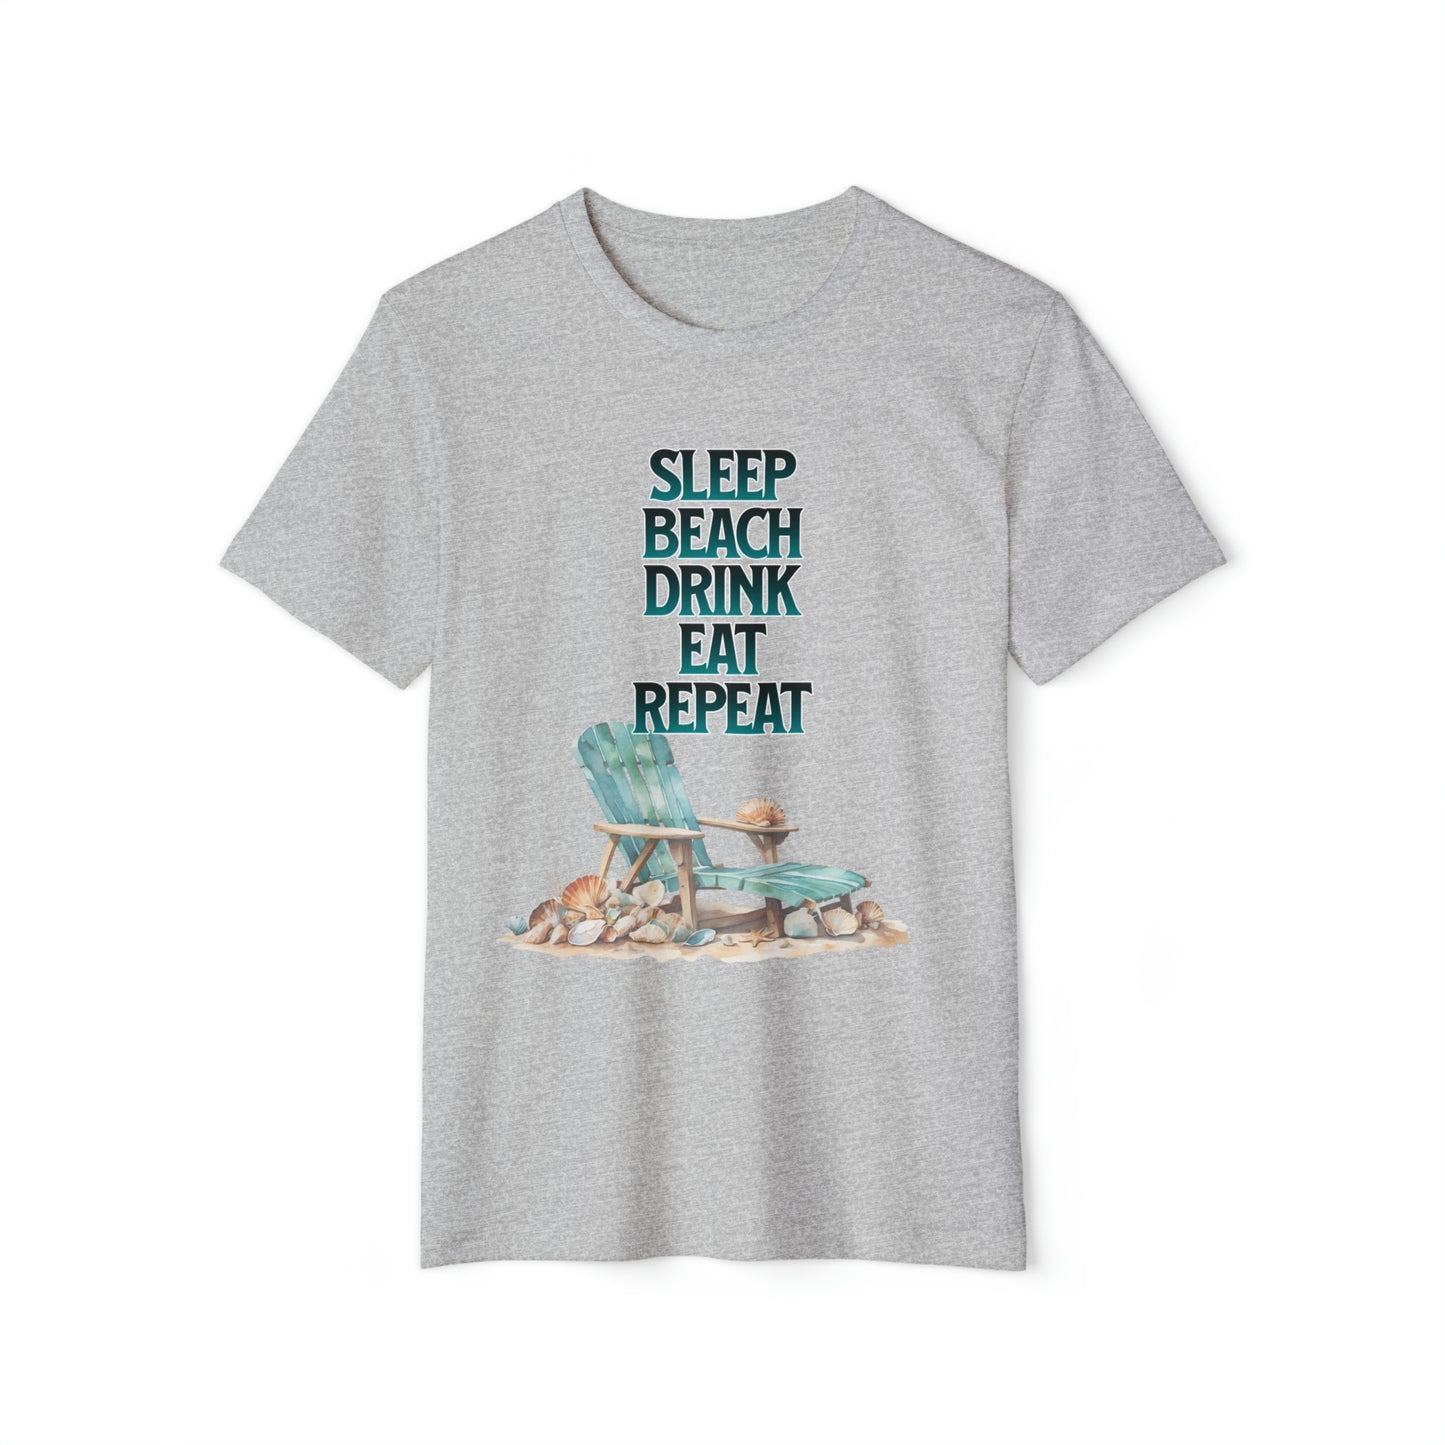 Beach Vacation TShirts, Sleep Beach Drink Eat Repeat Beach Lover Shirt, Recycled Organic Tee For Men And Women